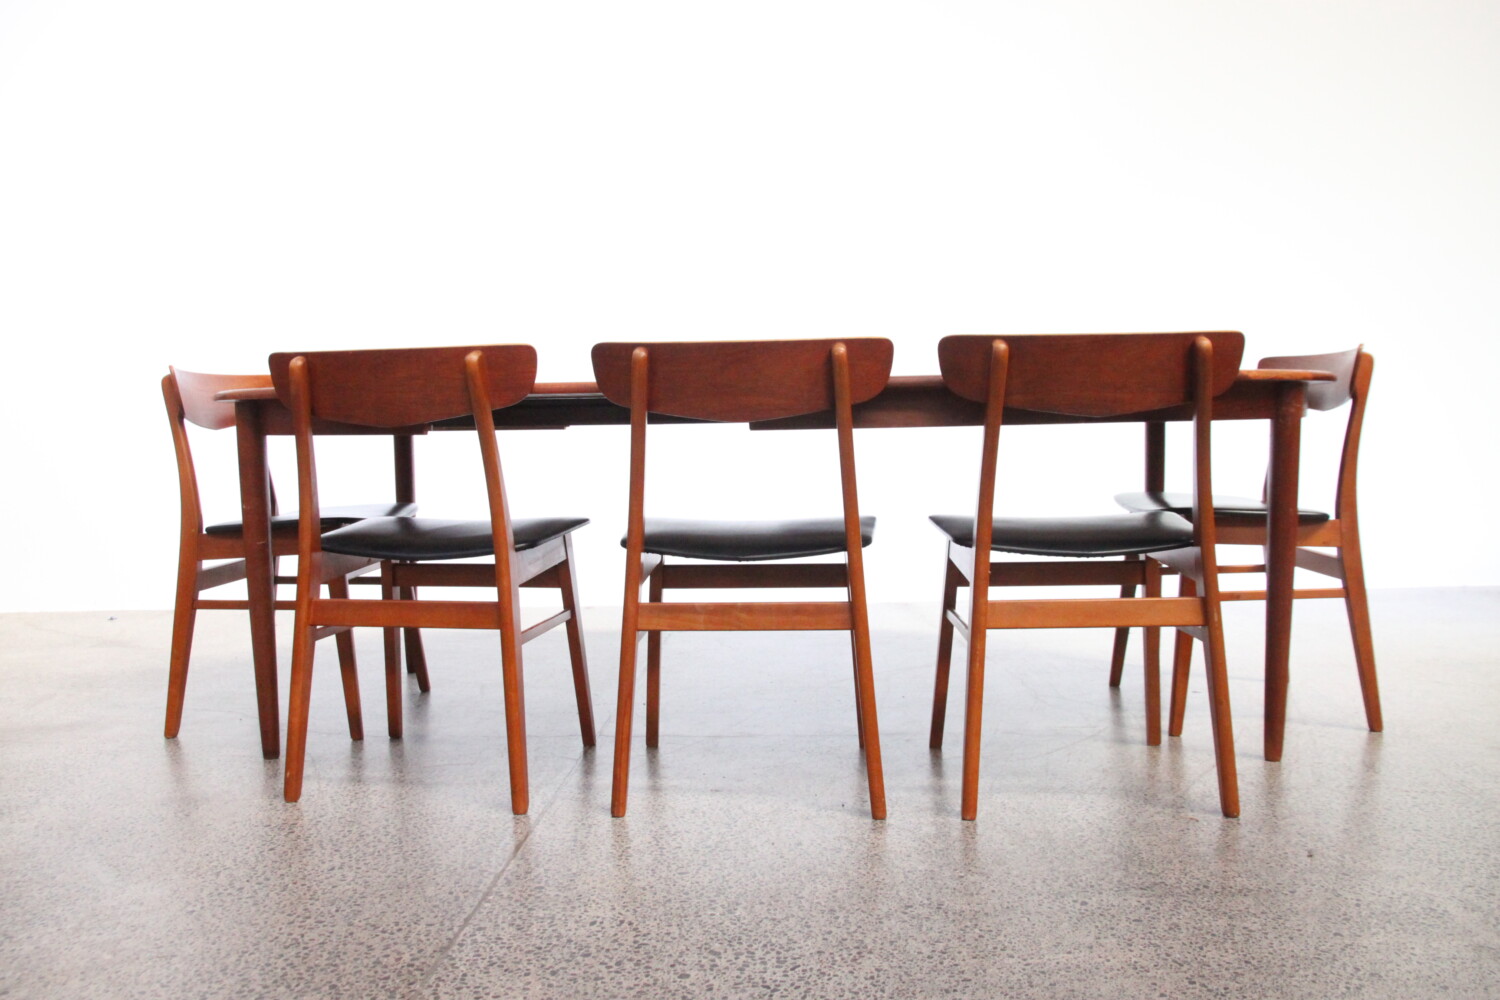 Teak Dining Chairs by Farstrup x6